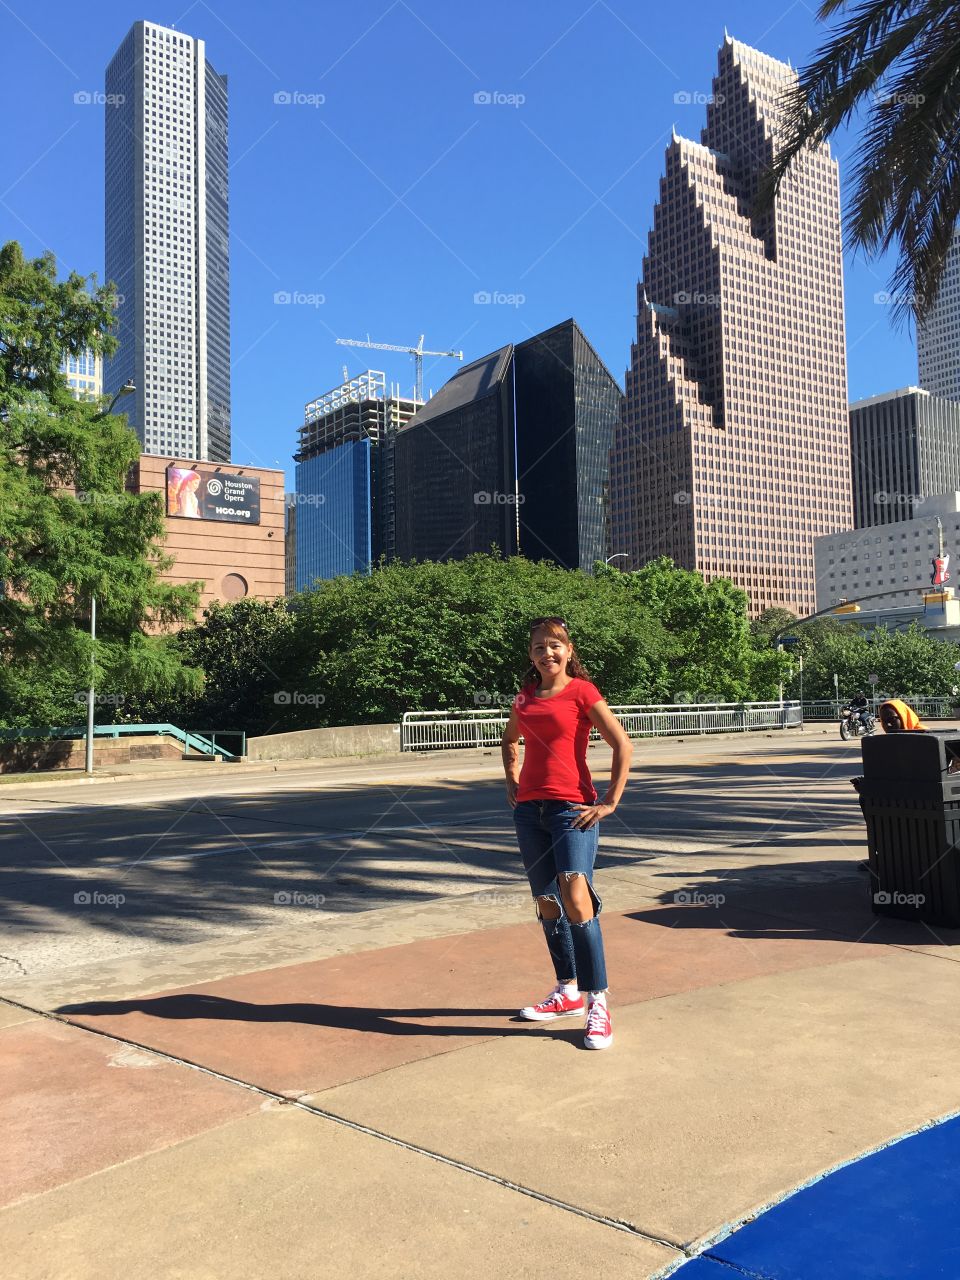 Our beautiful city .Houston Texas 